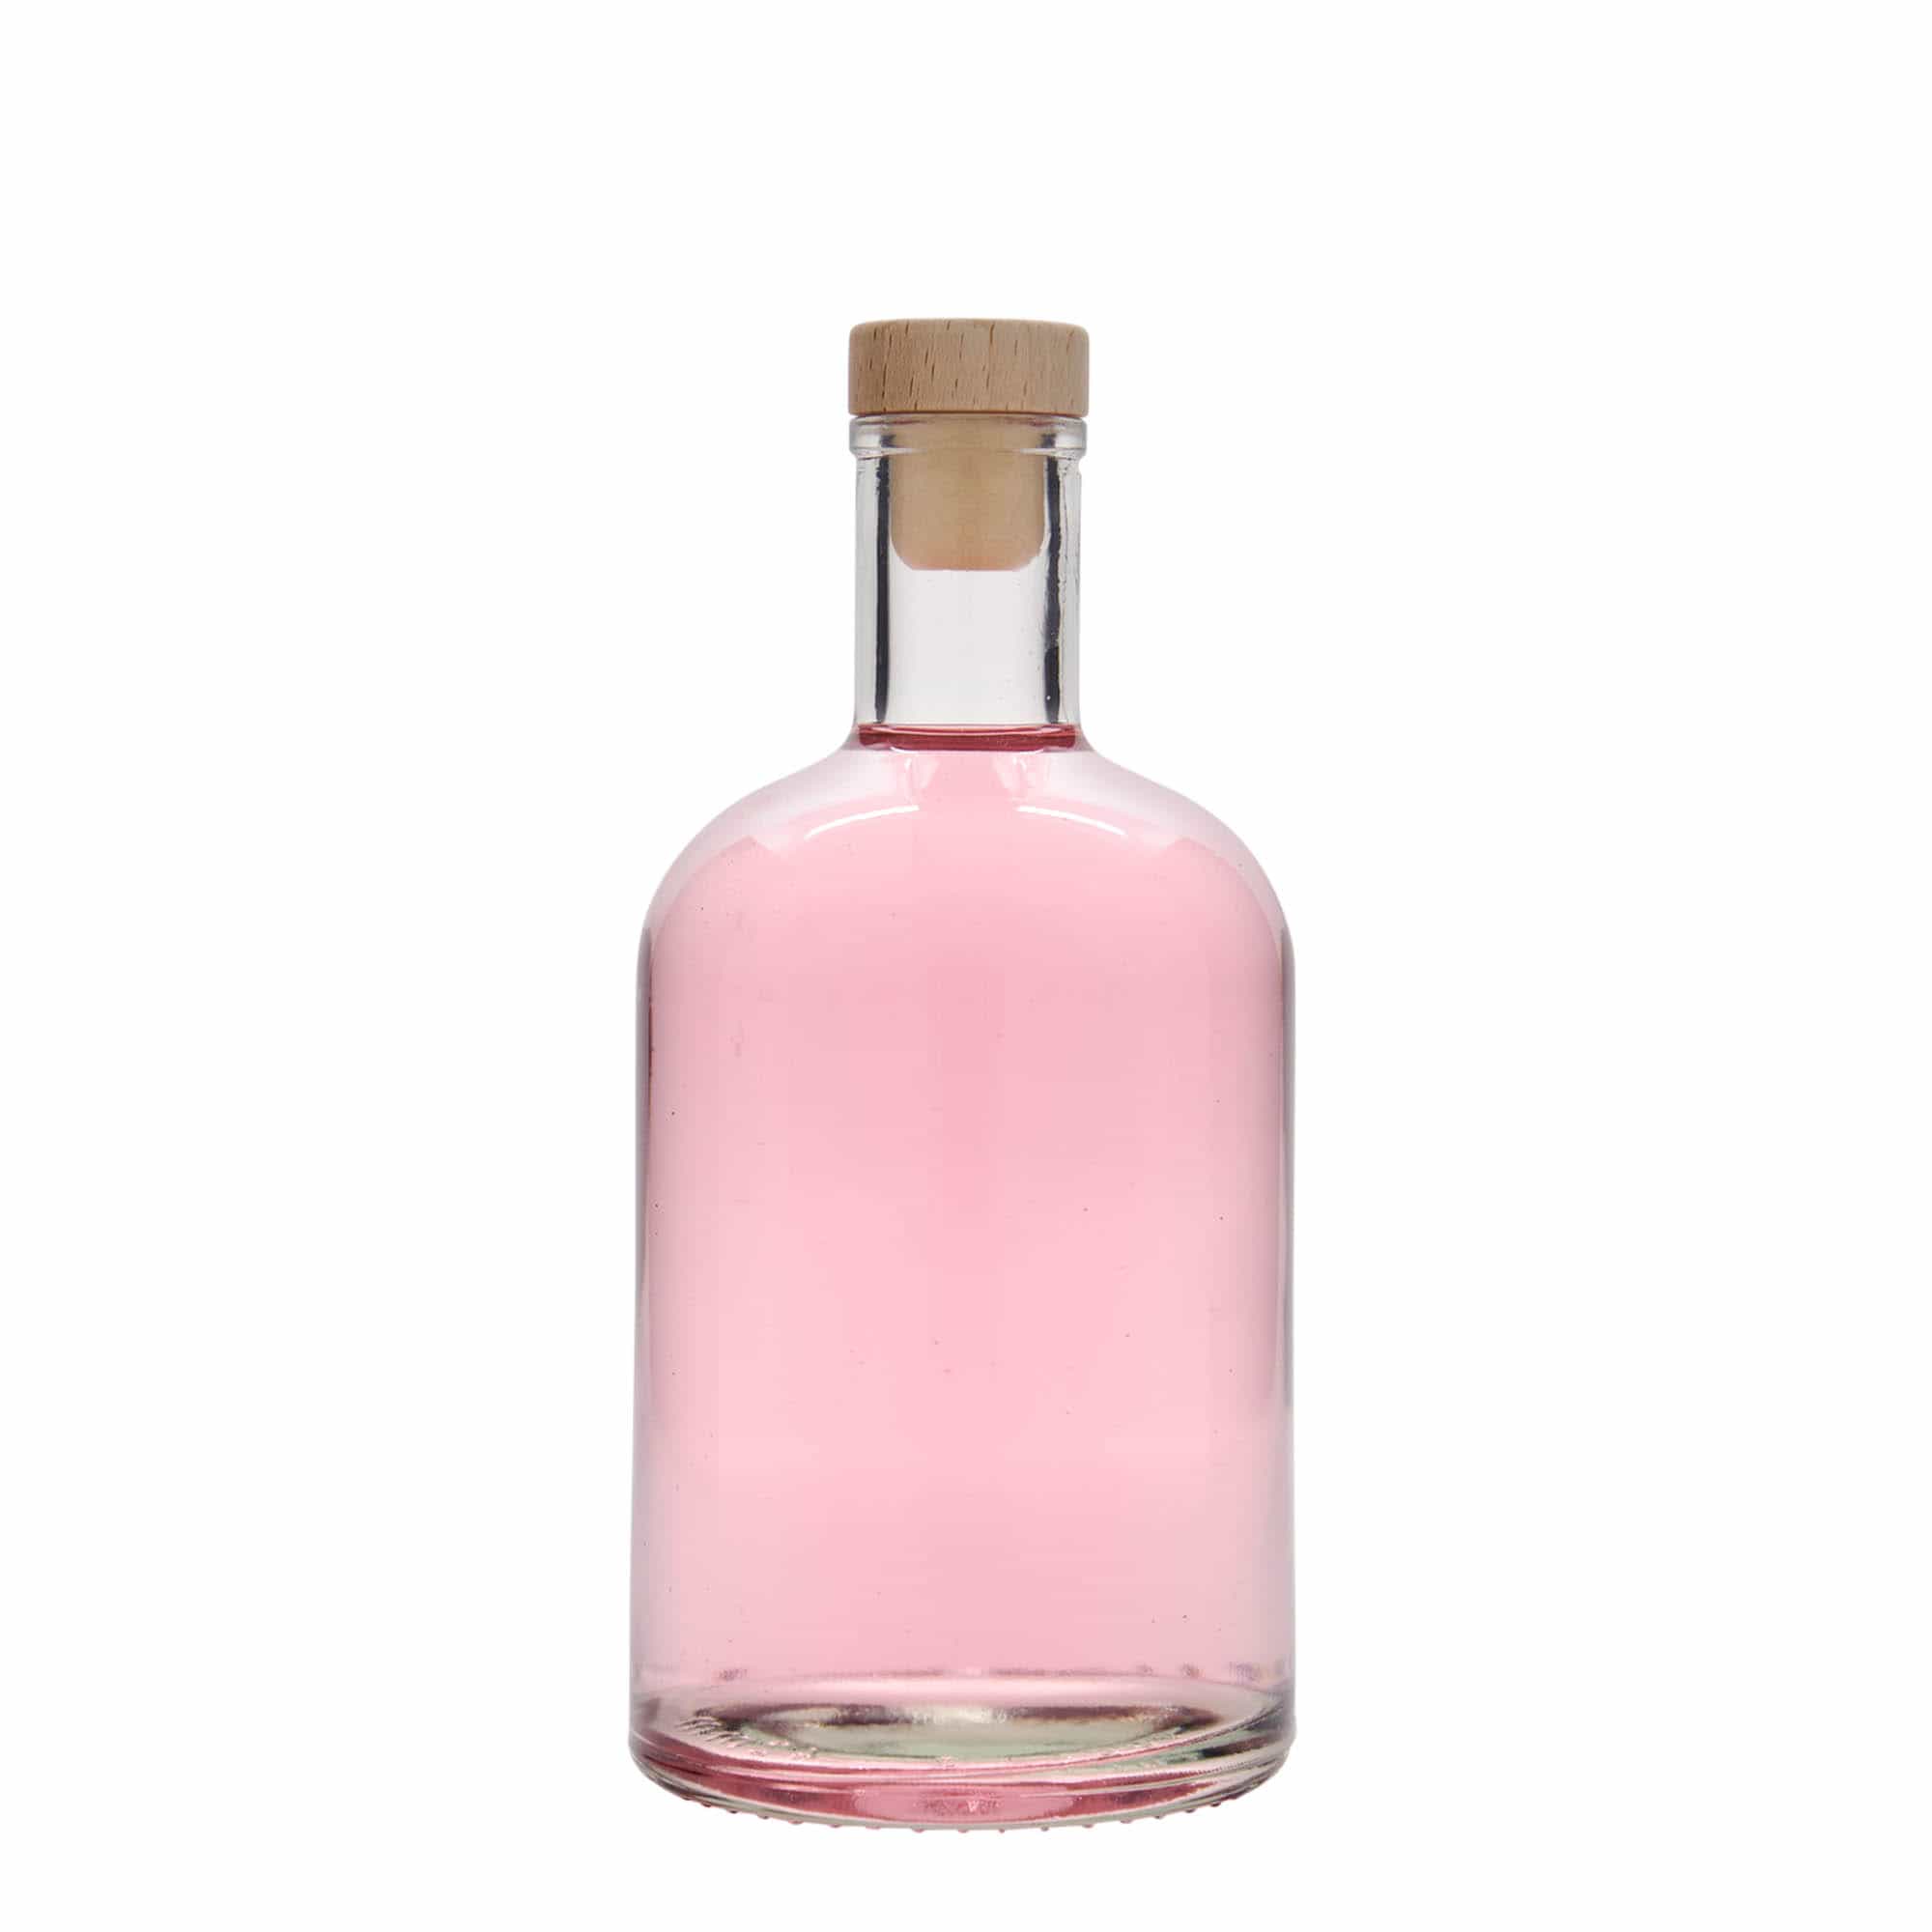 700 ml glasflaske 'Gerardino', åbning: Kork